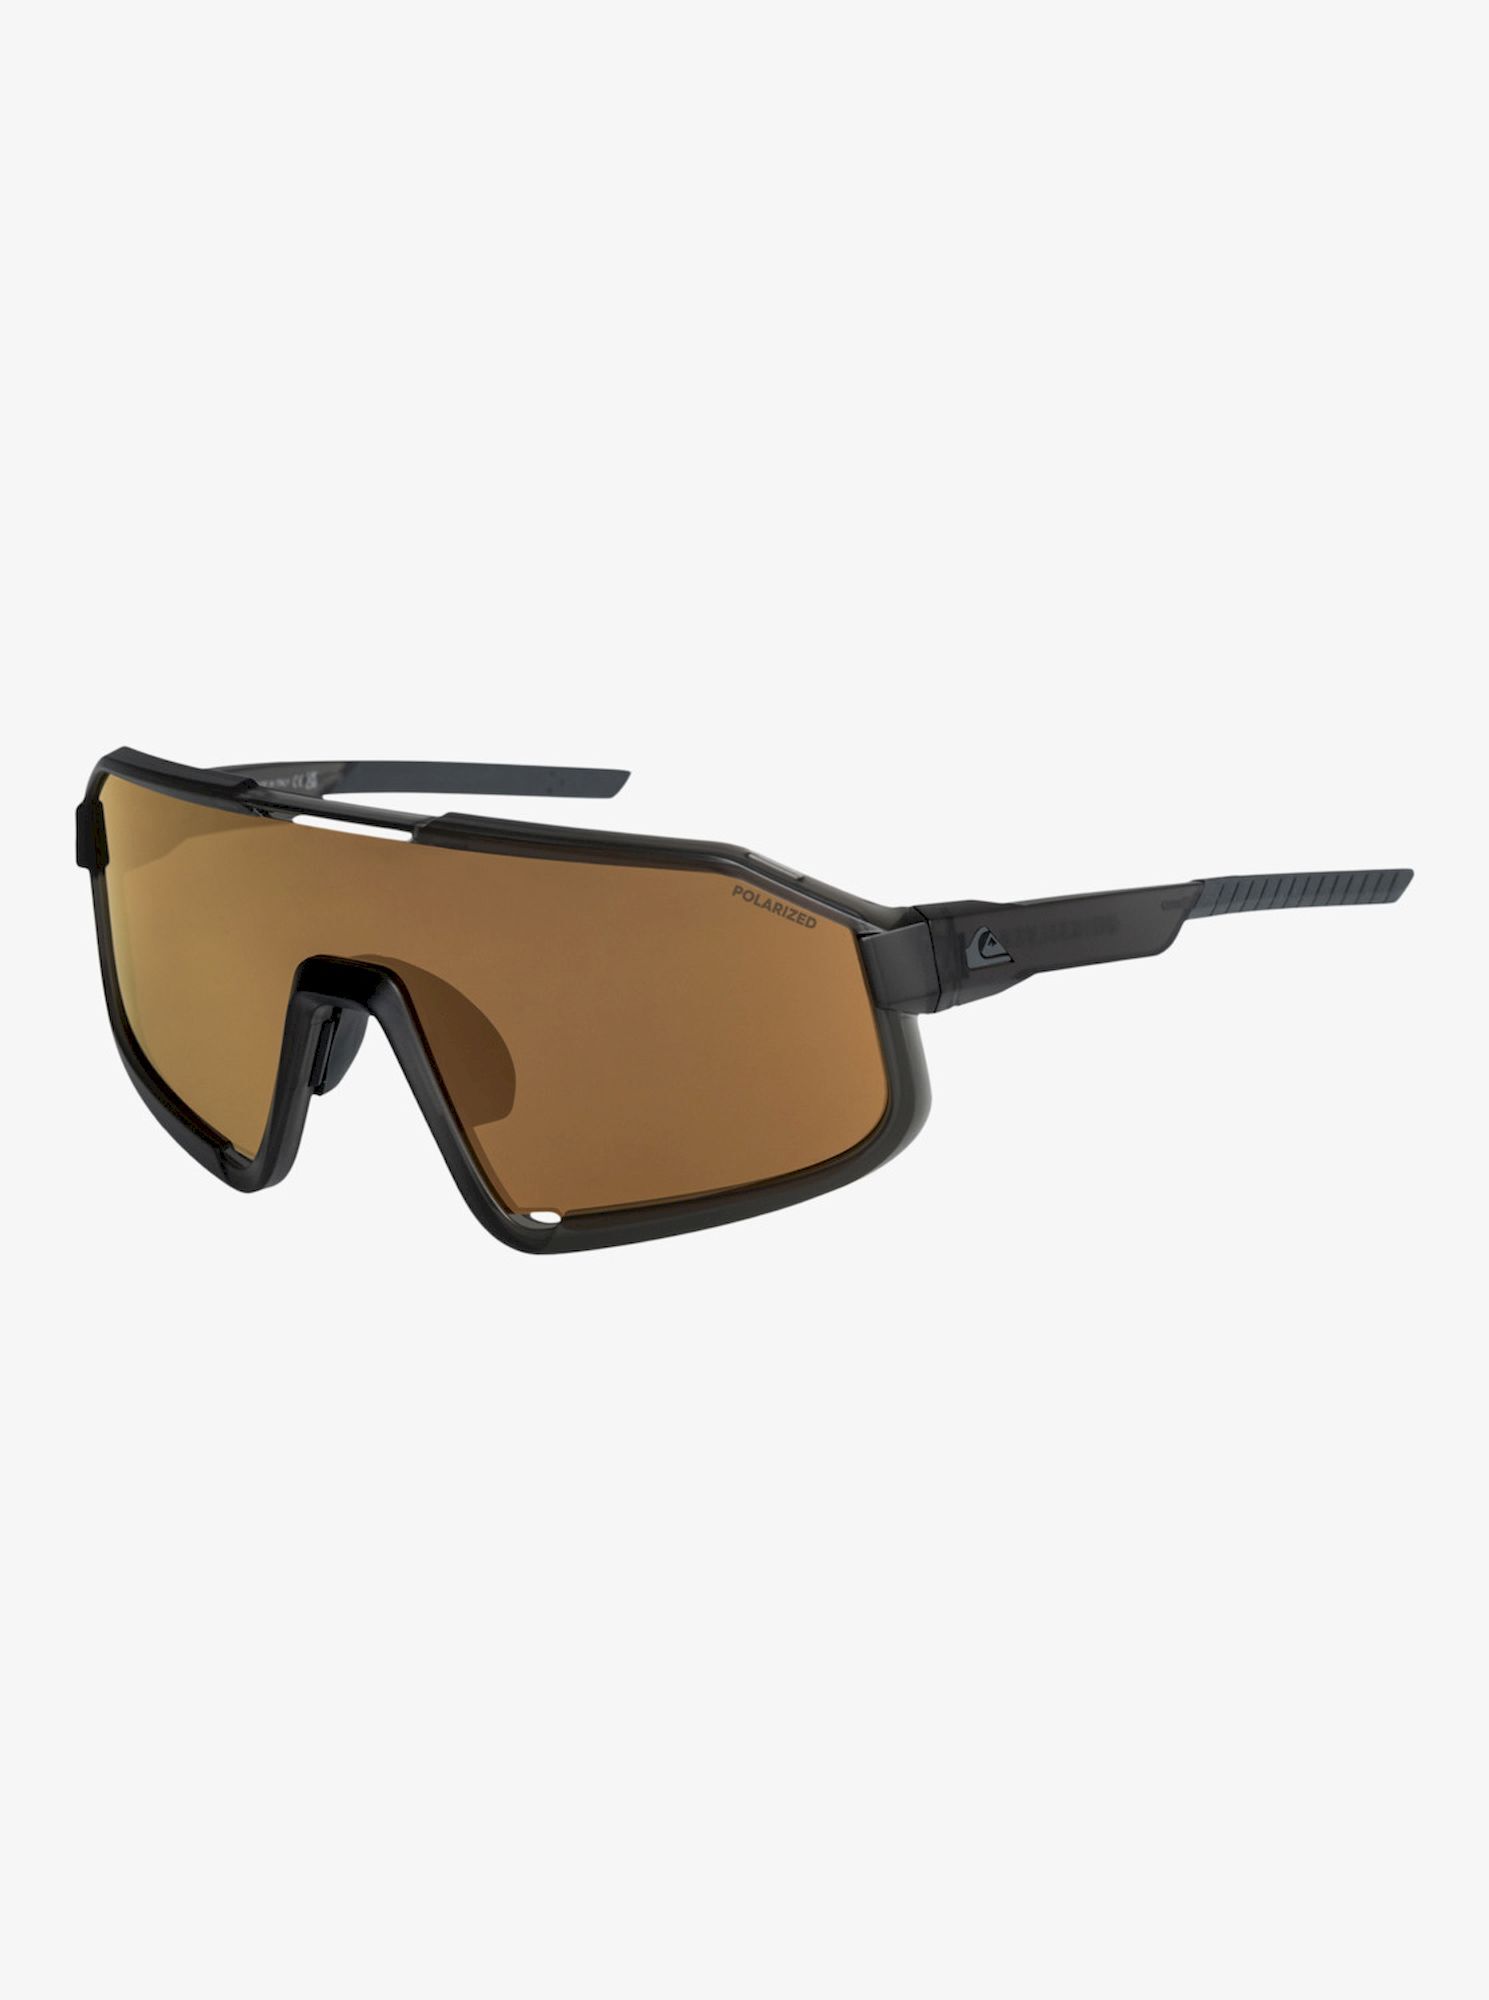 Quiksilver Slash Polarized - Sunglasses - Men's